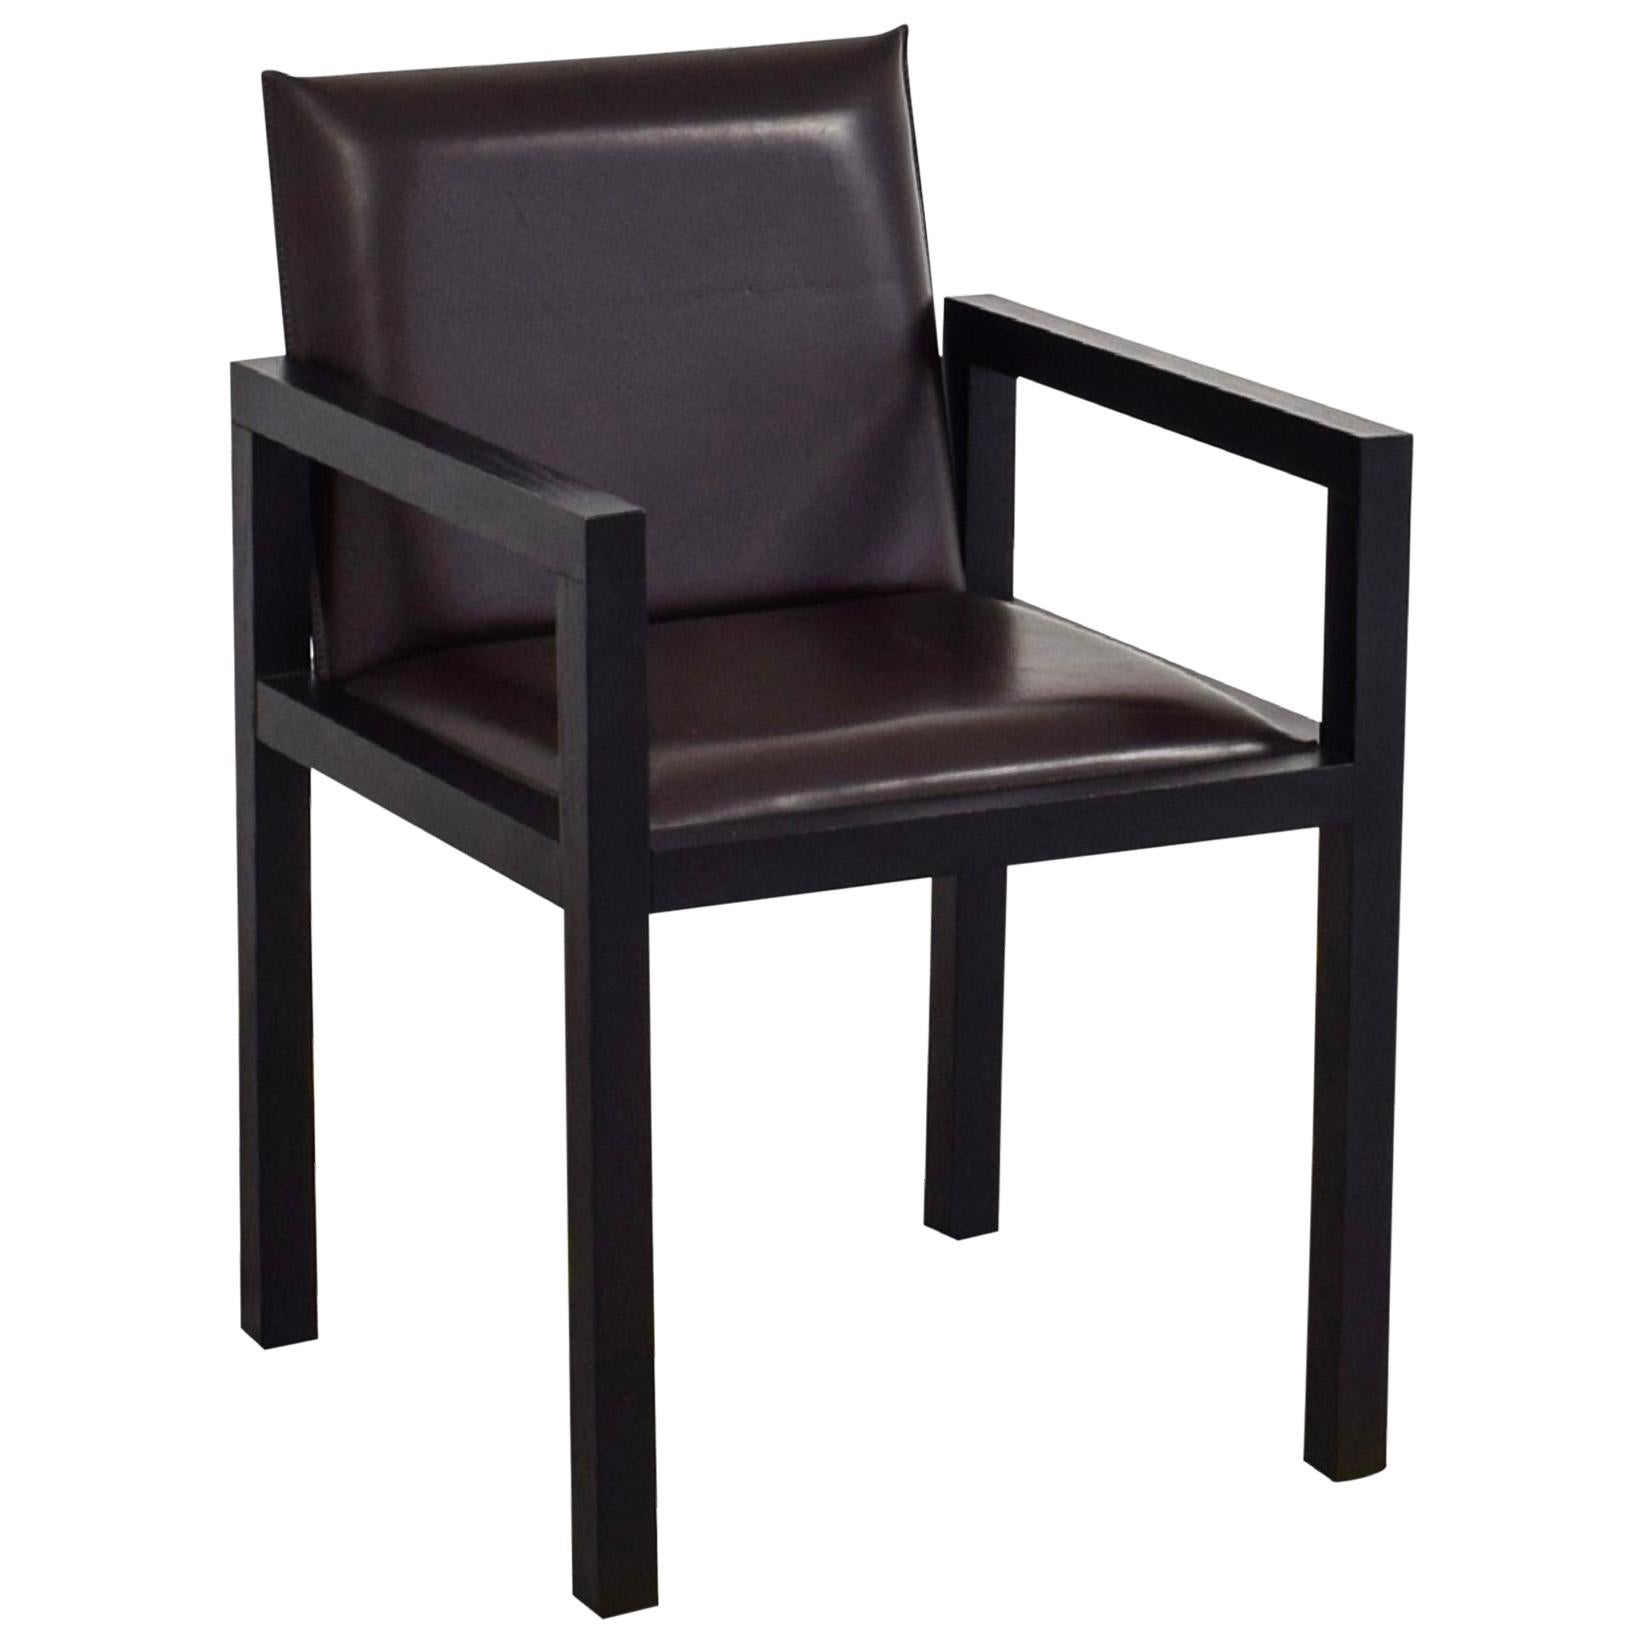 Armani Casa Modern ‘Dallas’ Armchair, Brown Black Leather and Oak Lounge Chair